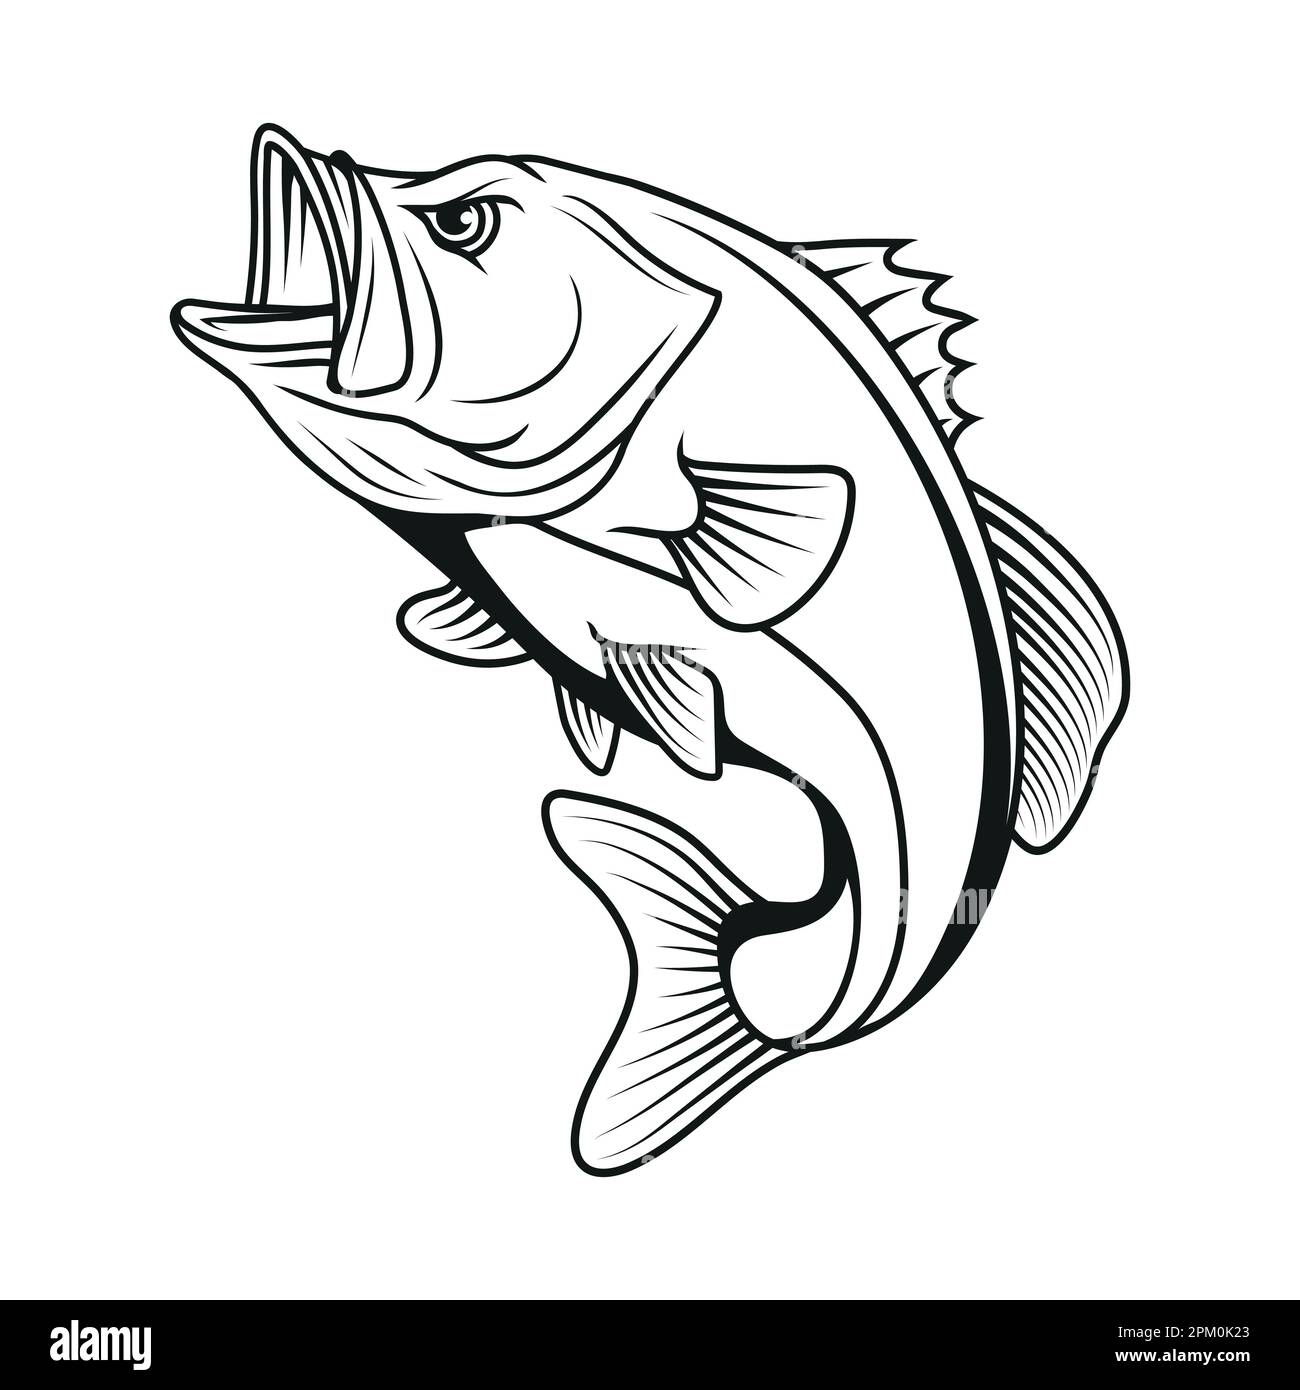 Bass fish. Vector illustration sketch of largemouth perch fish Stock Vector